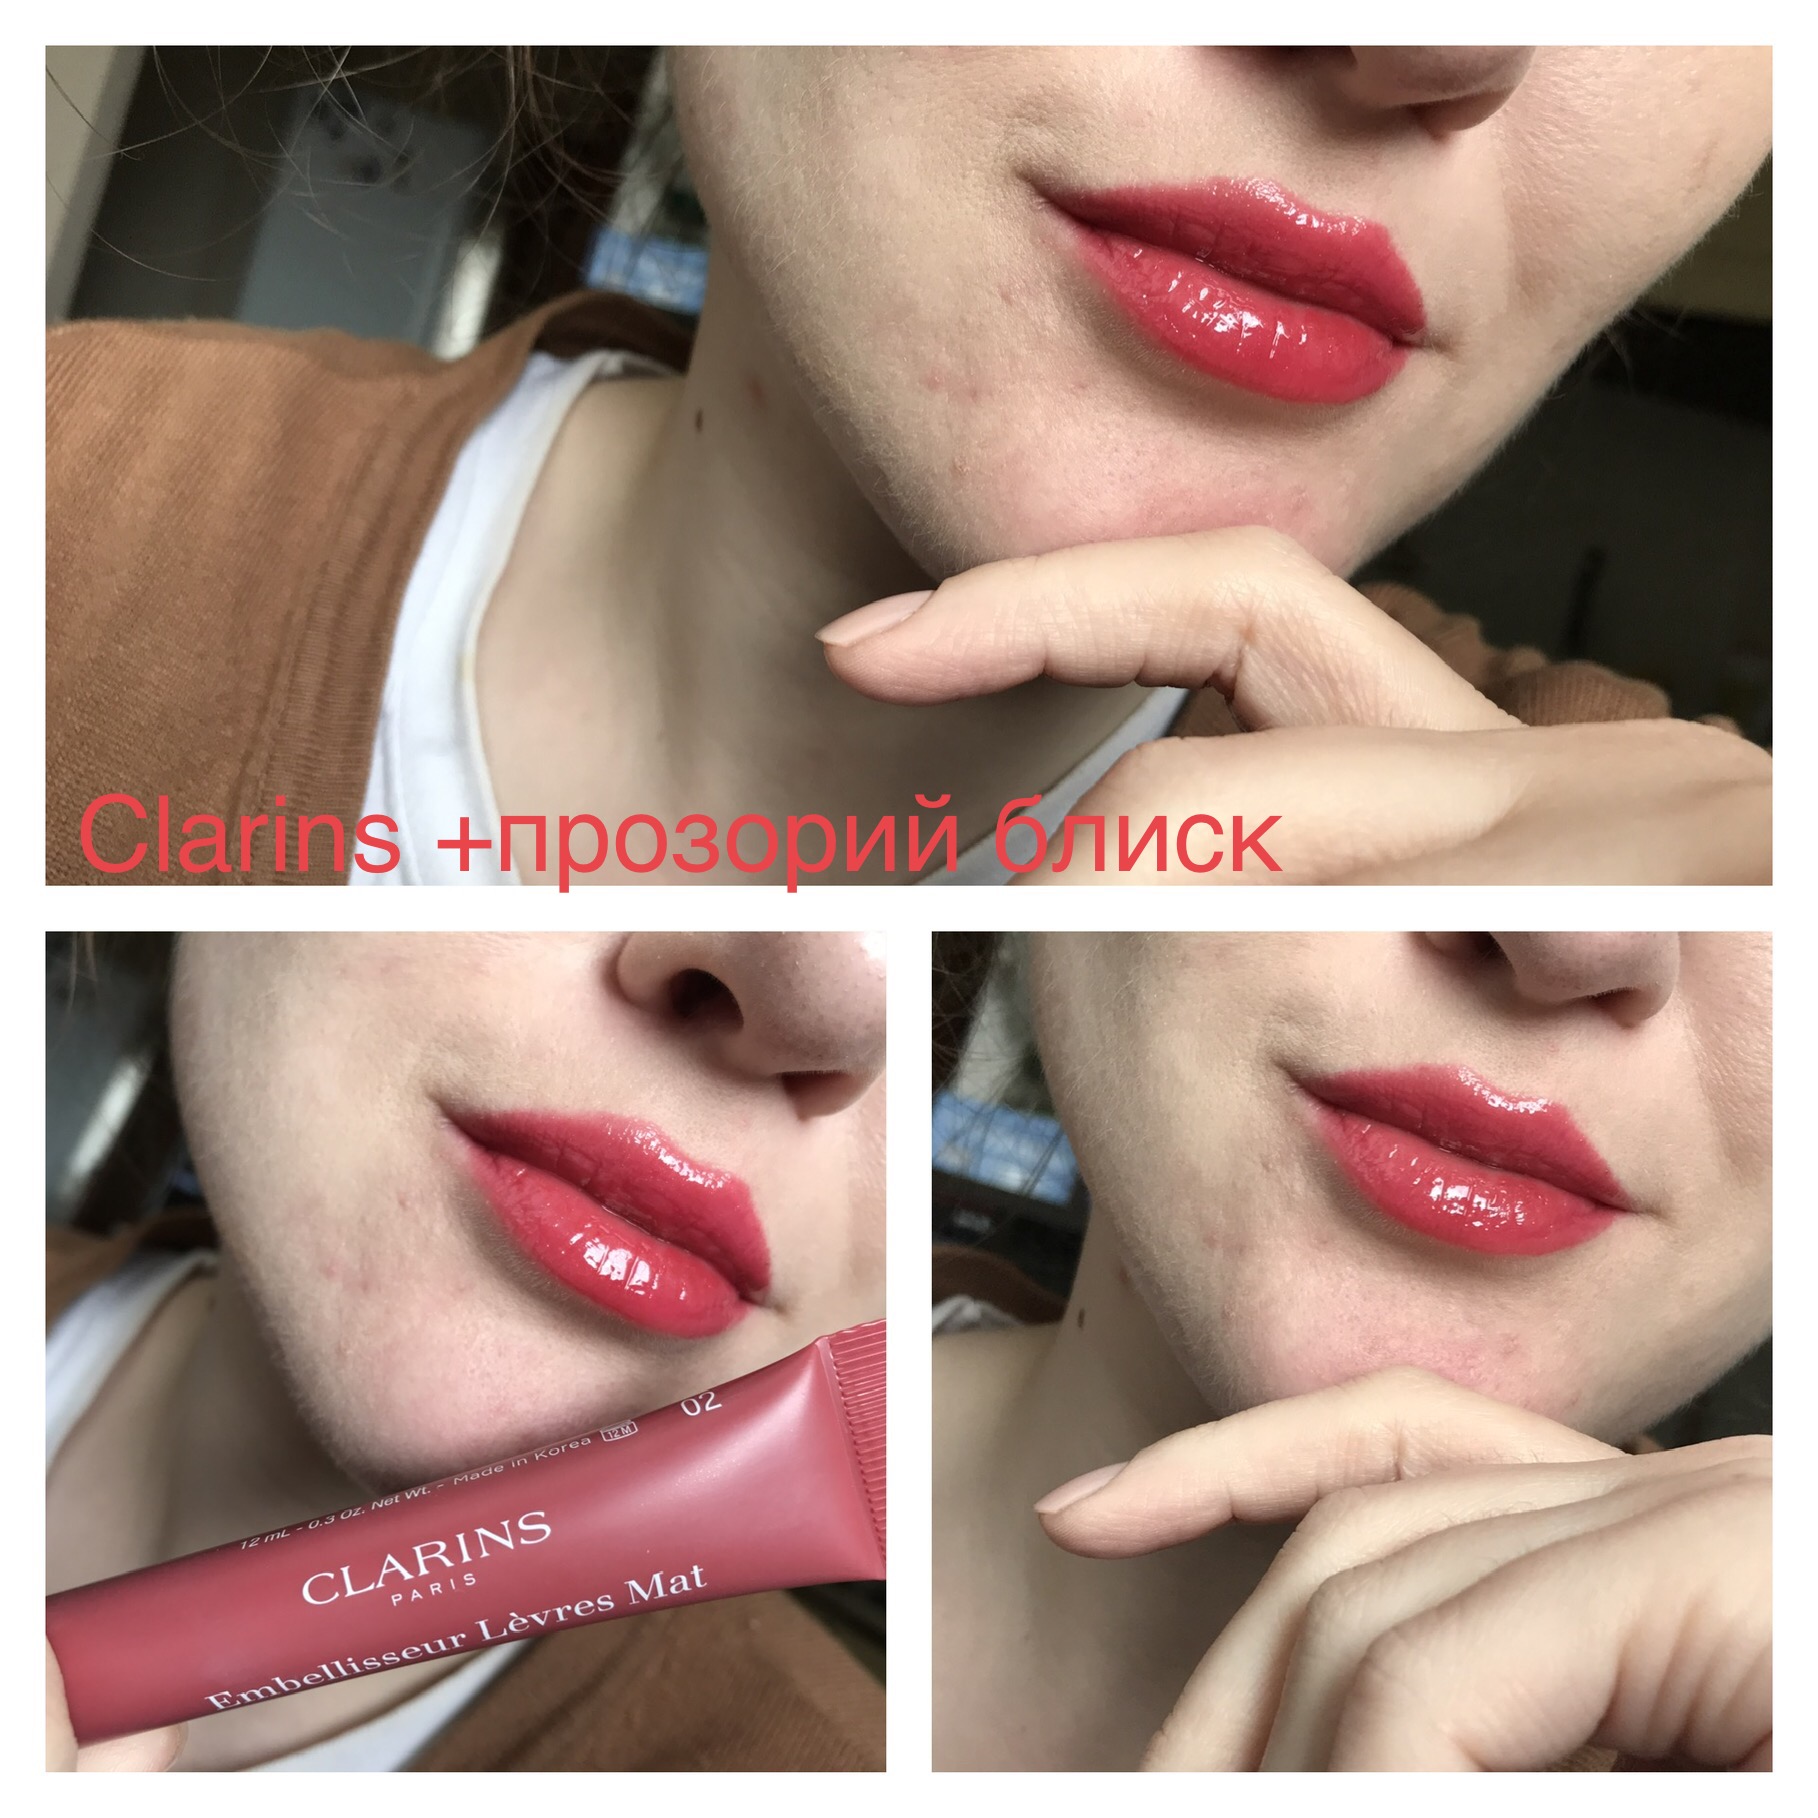 Clarins Velvet Lip Perfector